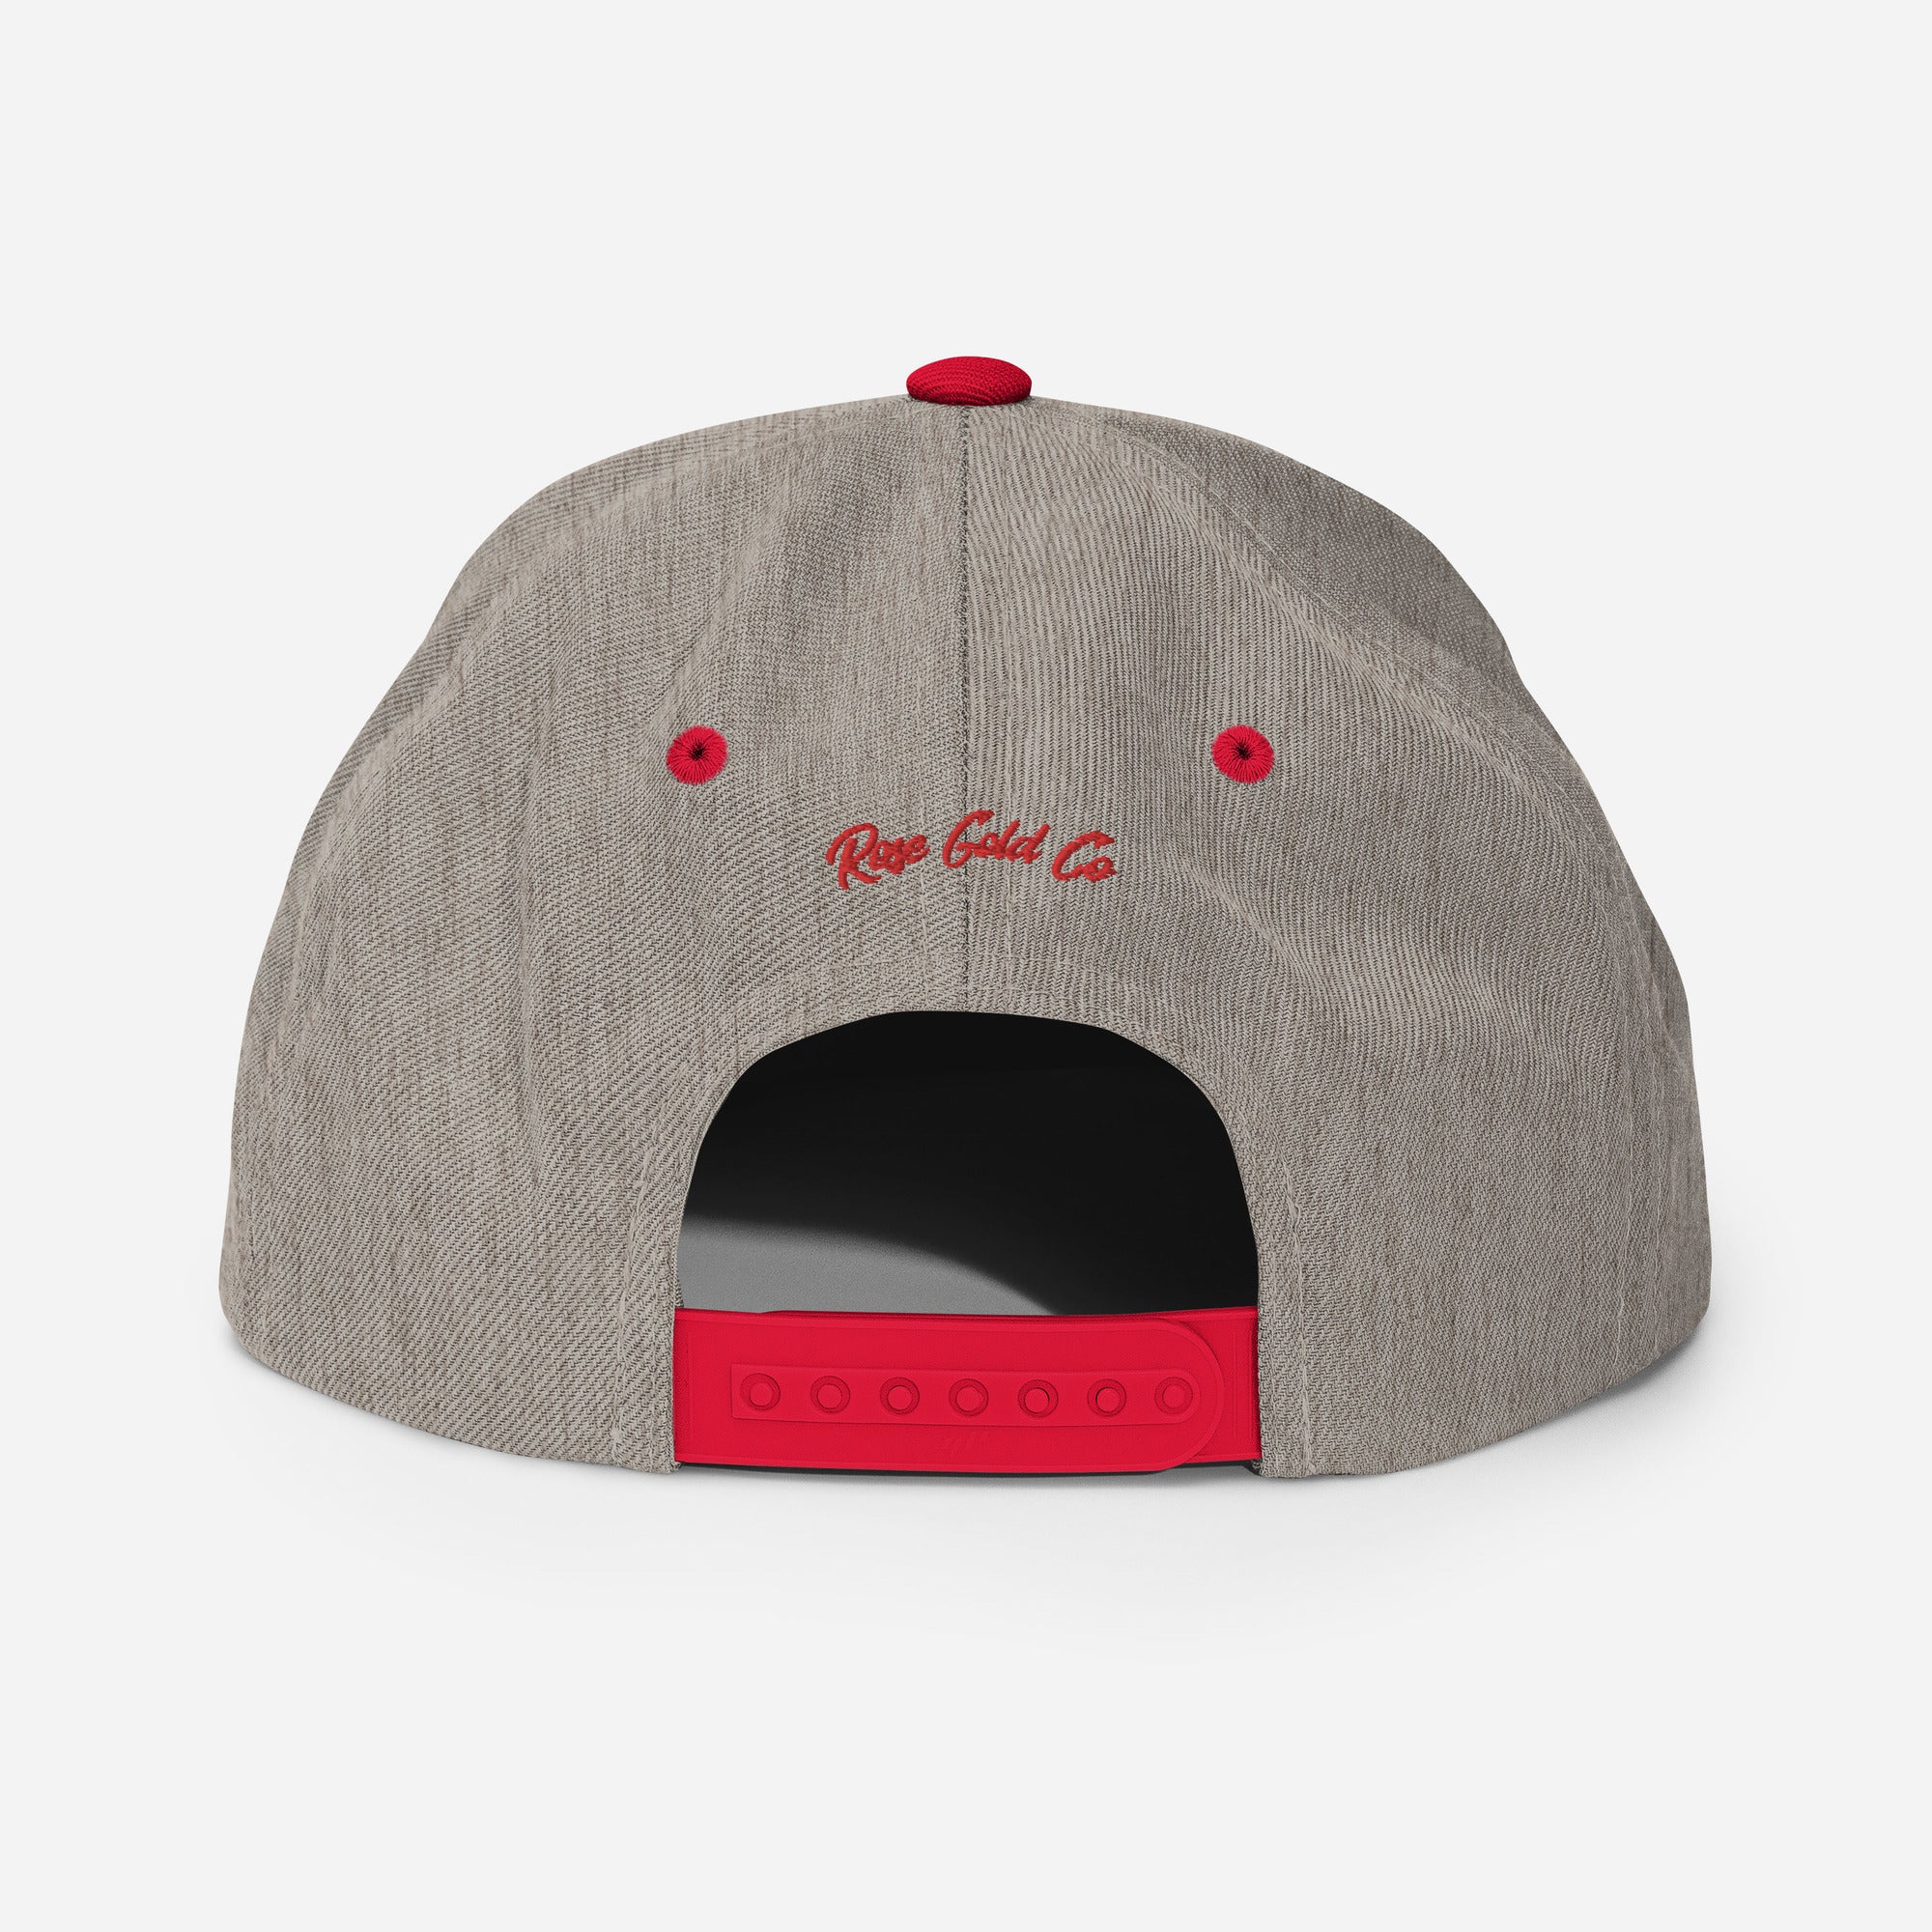 Cisn't Racin' Red Edition Snapback Hat